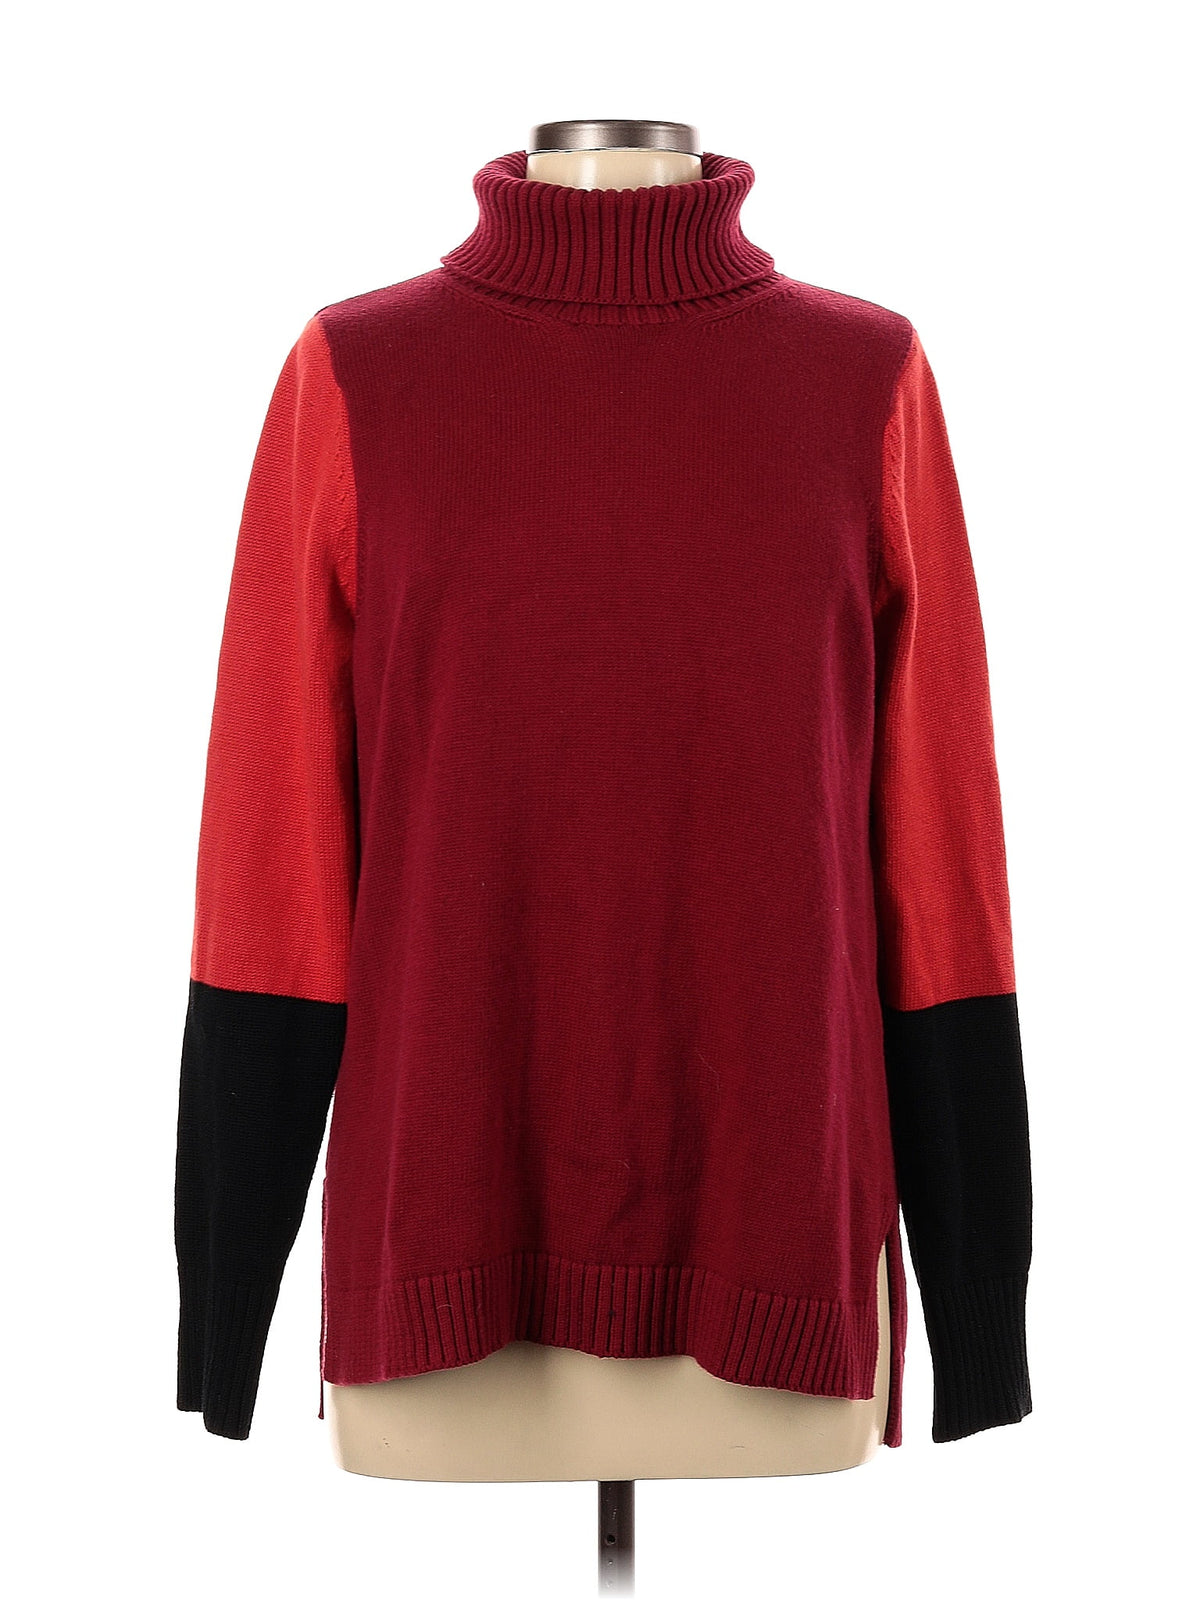 Turtleneck Sweater size - M